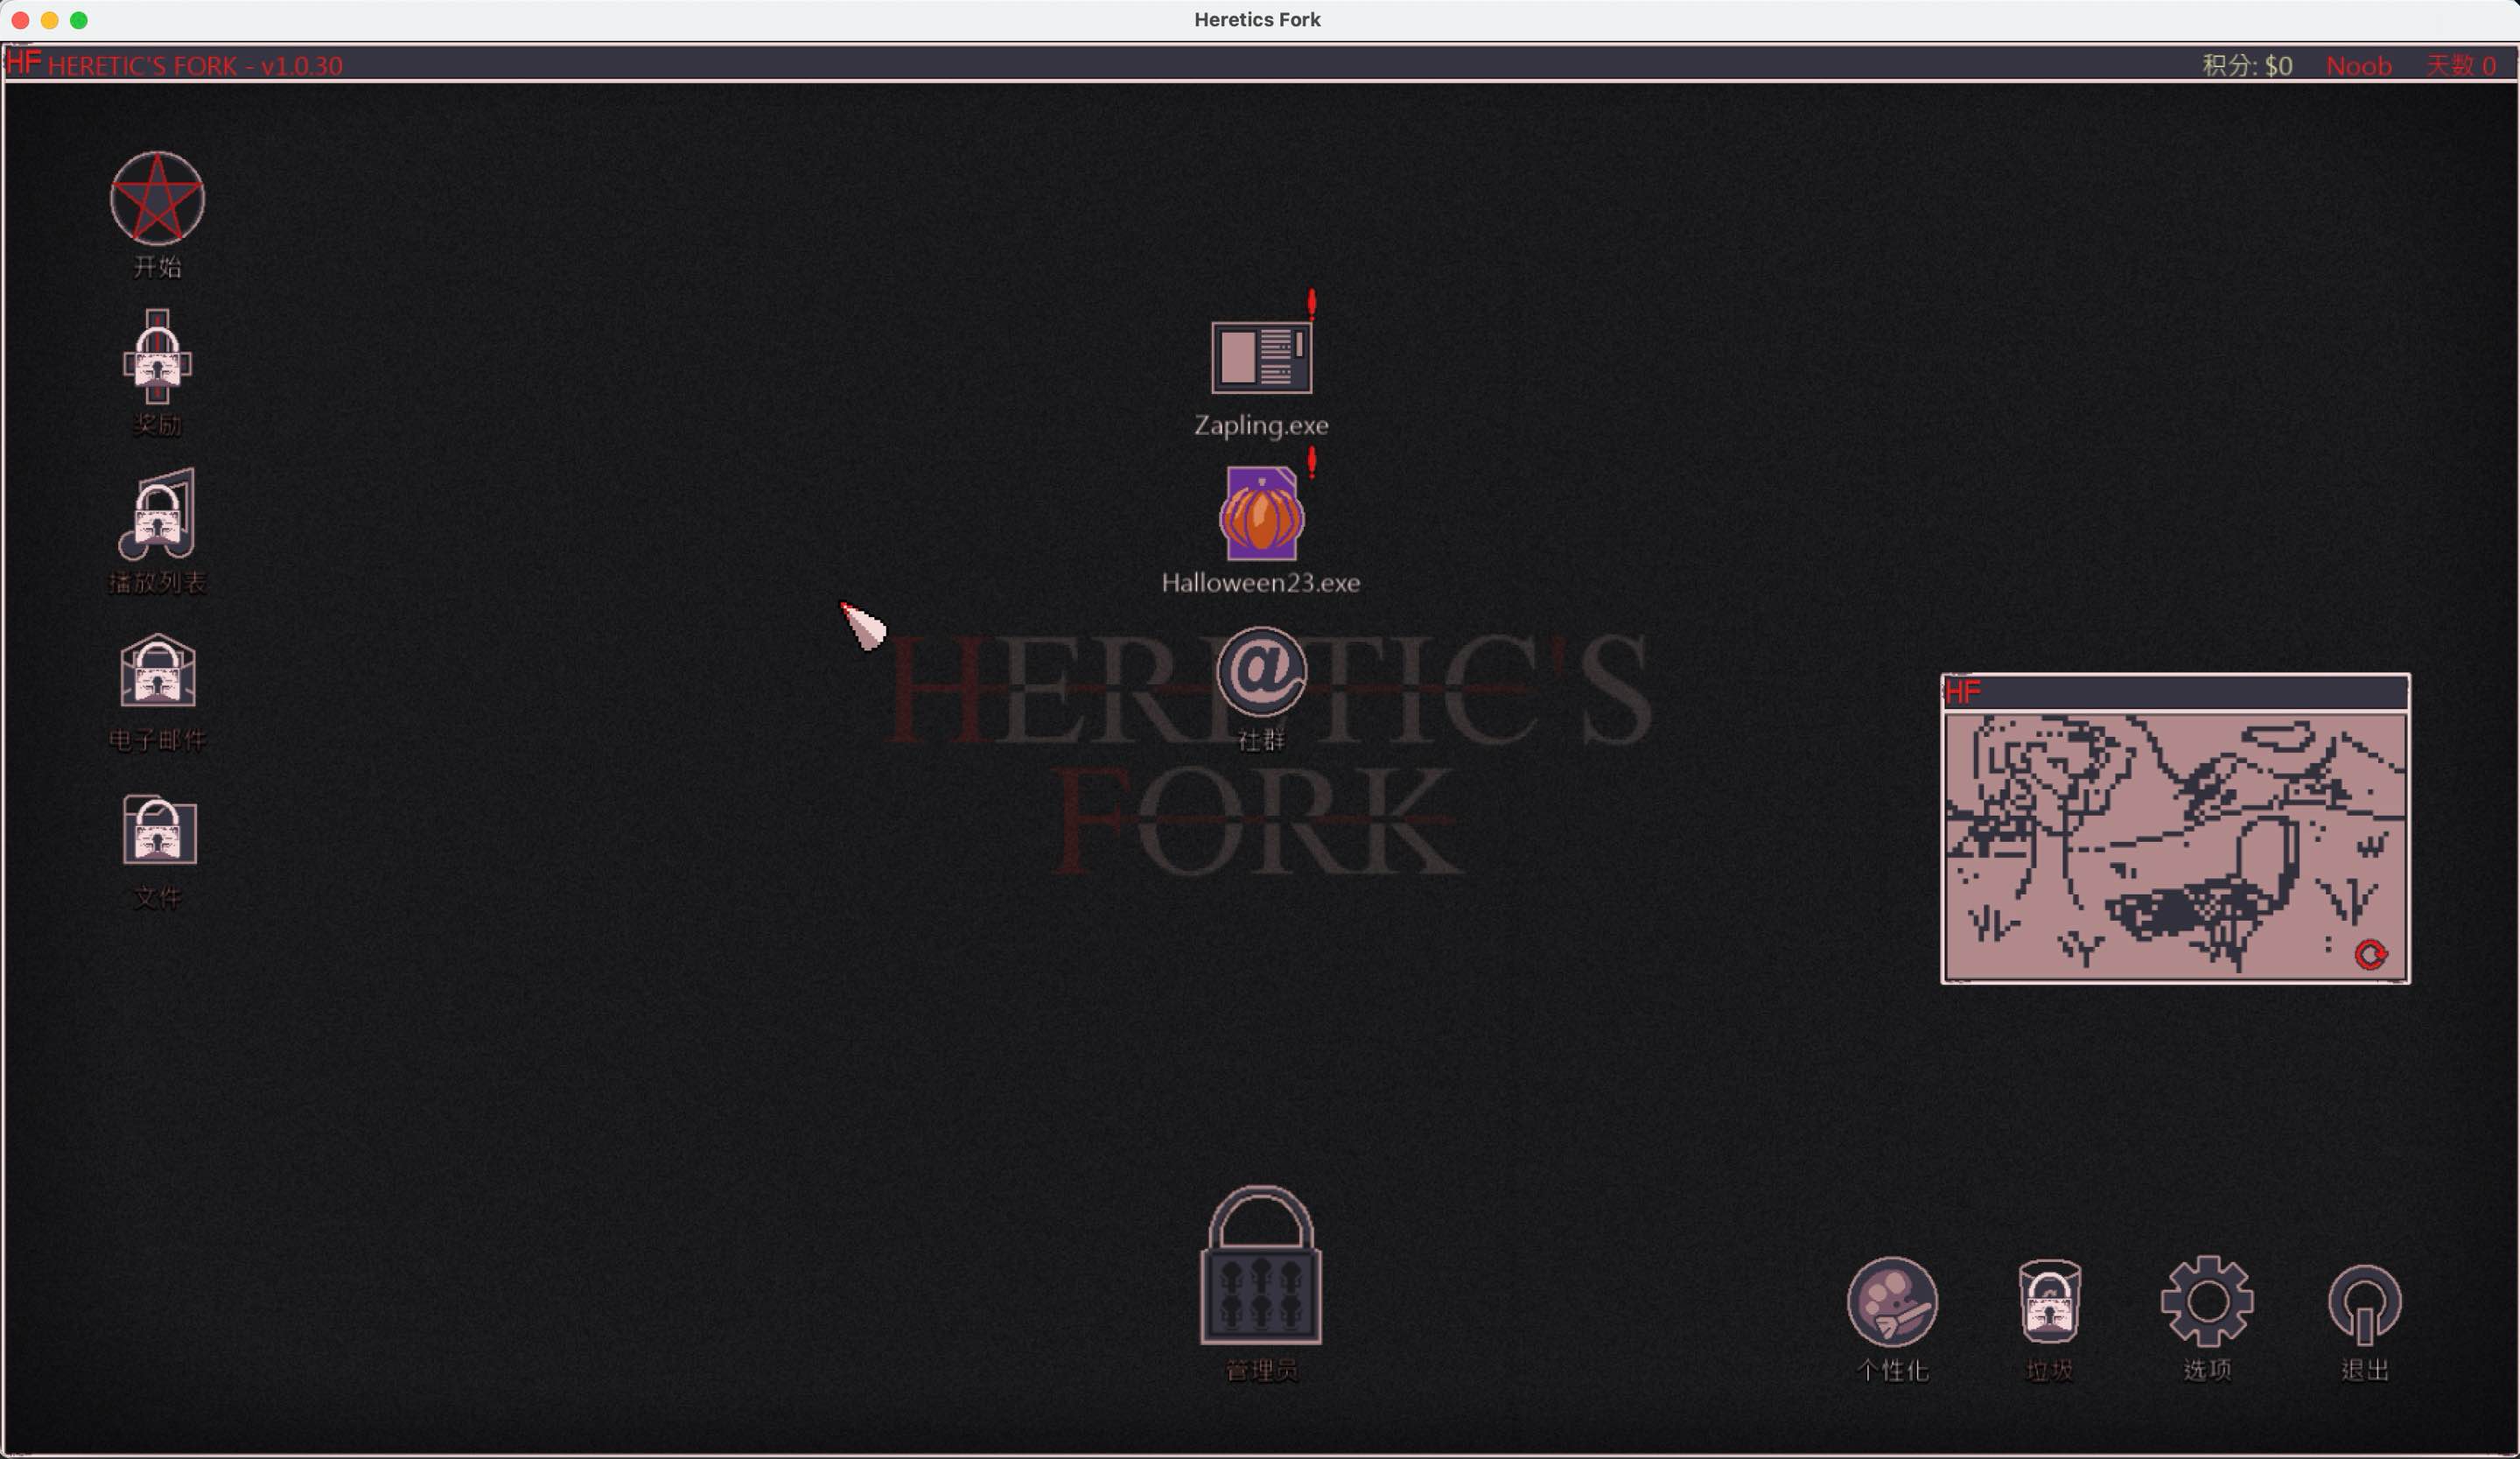 异端尖叉 for Mac v1.0.39 Heretics Fork 中文移植版 苹果电脑